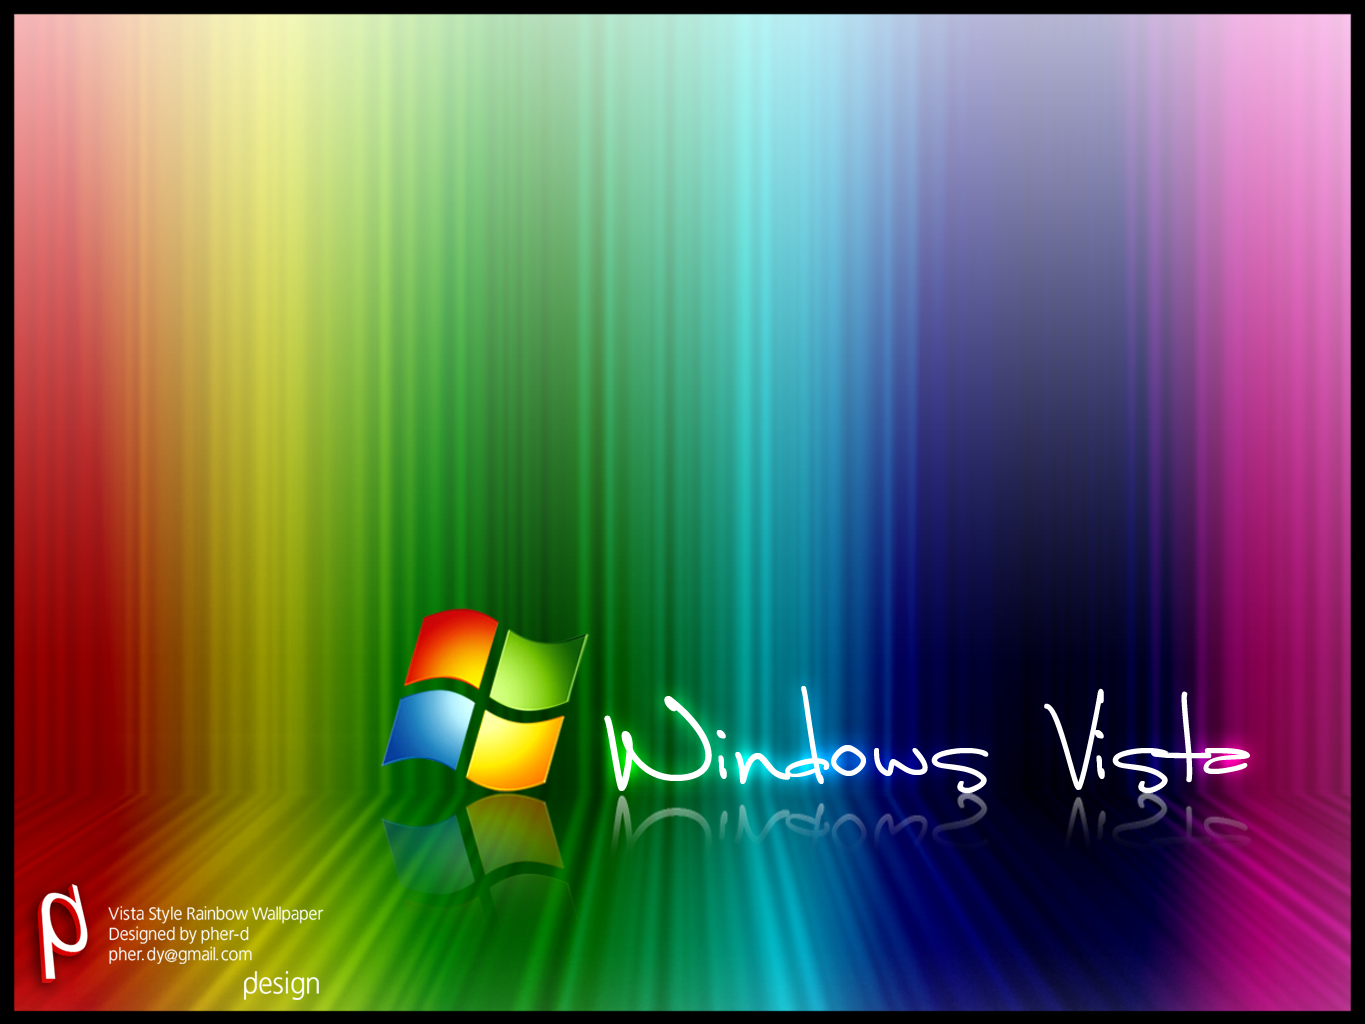 https://blogger.googleusercontent.com/img/b/R29vZ2xl/AVvXsEgJpB1wljUcXf2v5wUJ5r4wwlZZjqkKWNLTnUn4OfTb1rUfUvGwCdrqKgiPN3NOKxs5OOd60LOlf6V9syHTZtEIczZGzuoOtObOdbDs3HJUHRWF-T_fGP7dlUNVk_YXLQBK3v-rOoresO4/s1600/Vista_Style_Rainbow_Wallpaper_by_pher_d.png